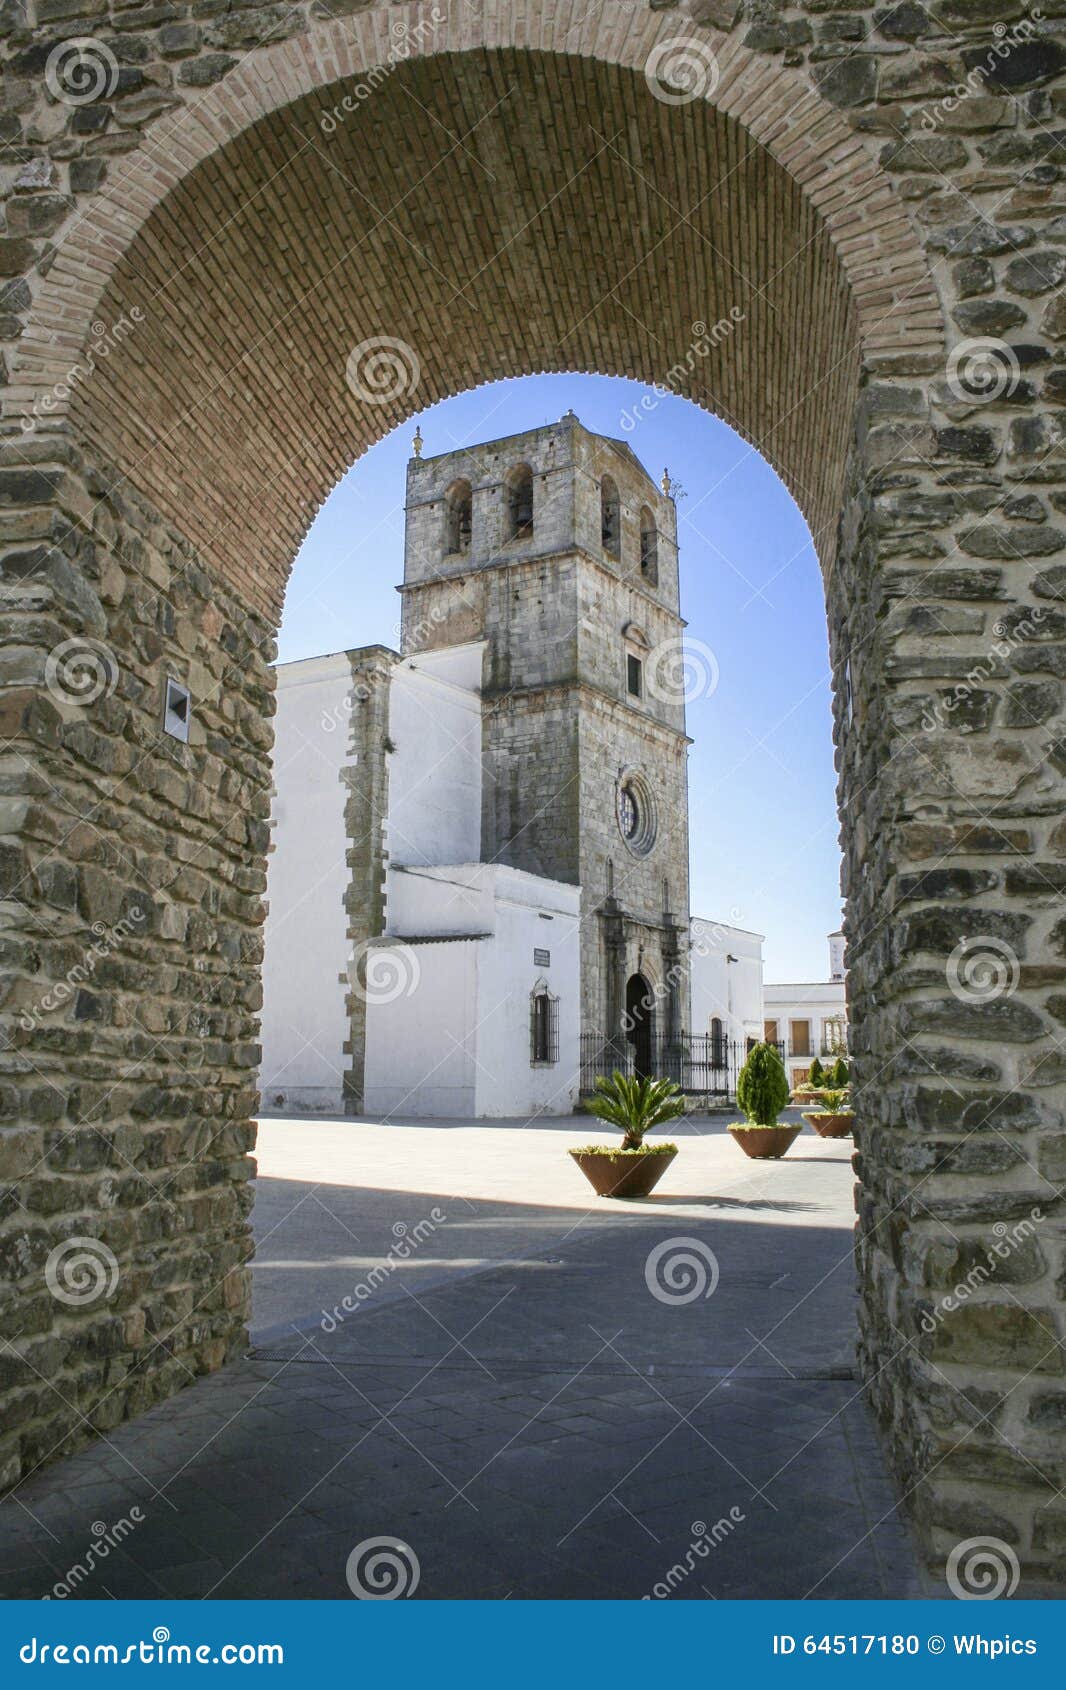 saint mary of the castle church, olivenza, spain